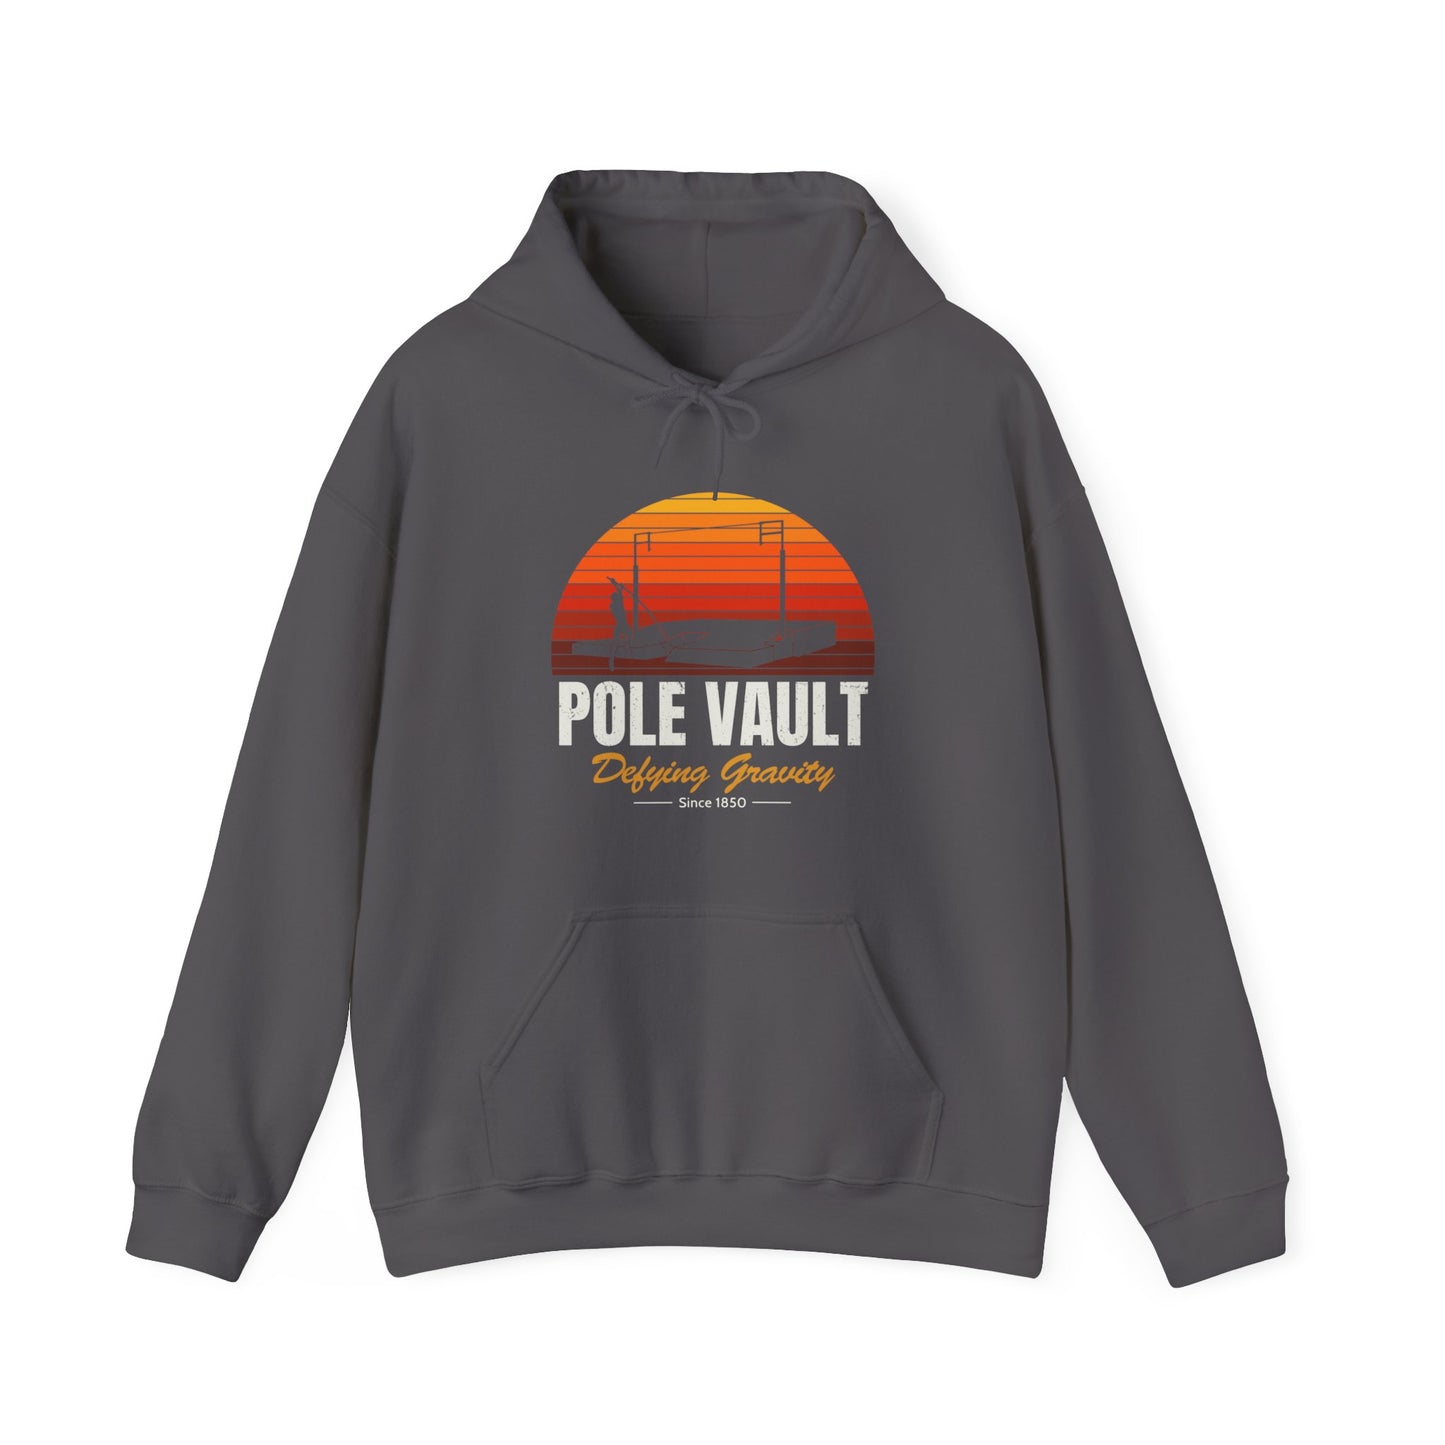 Pole Vault Defying Gravity - Hoodie